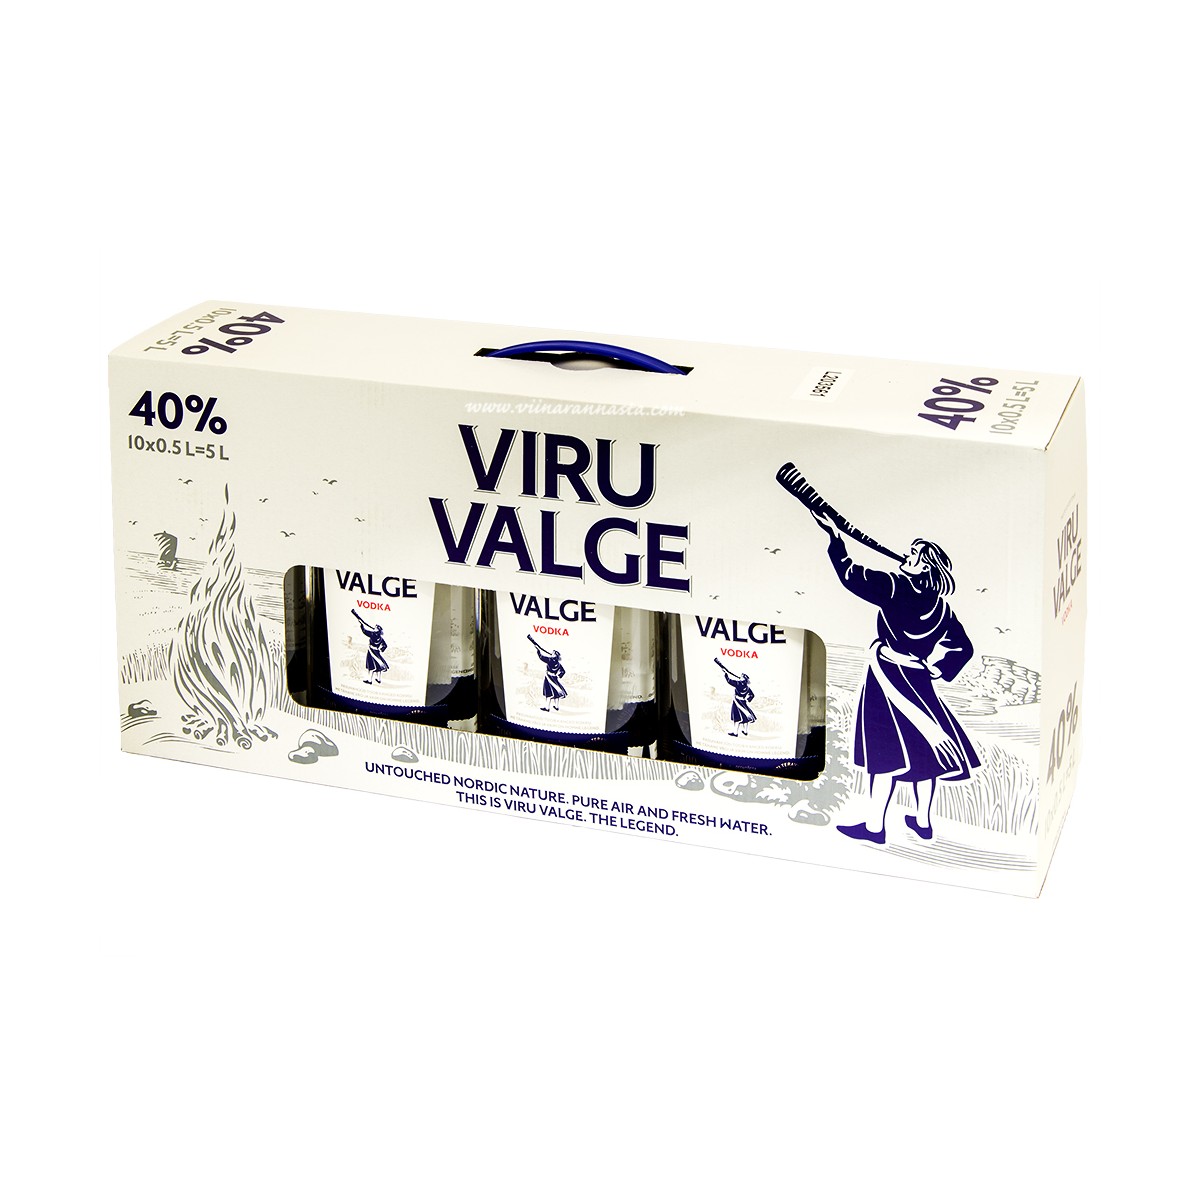 Viru Valge 40% 10x50cl